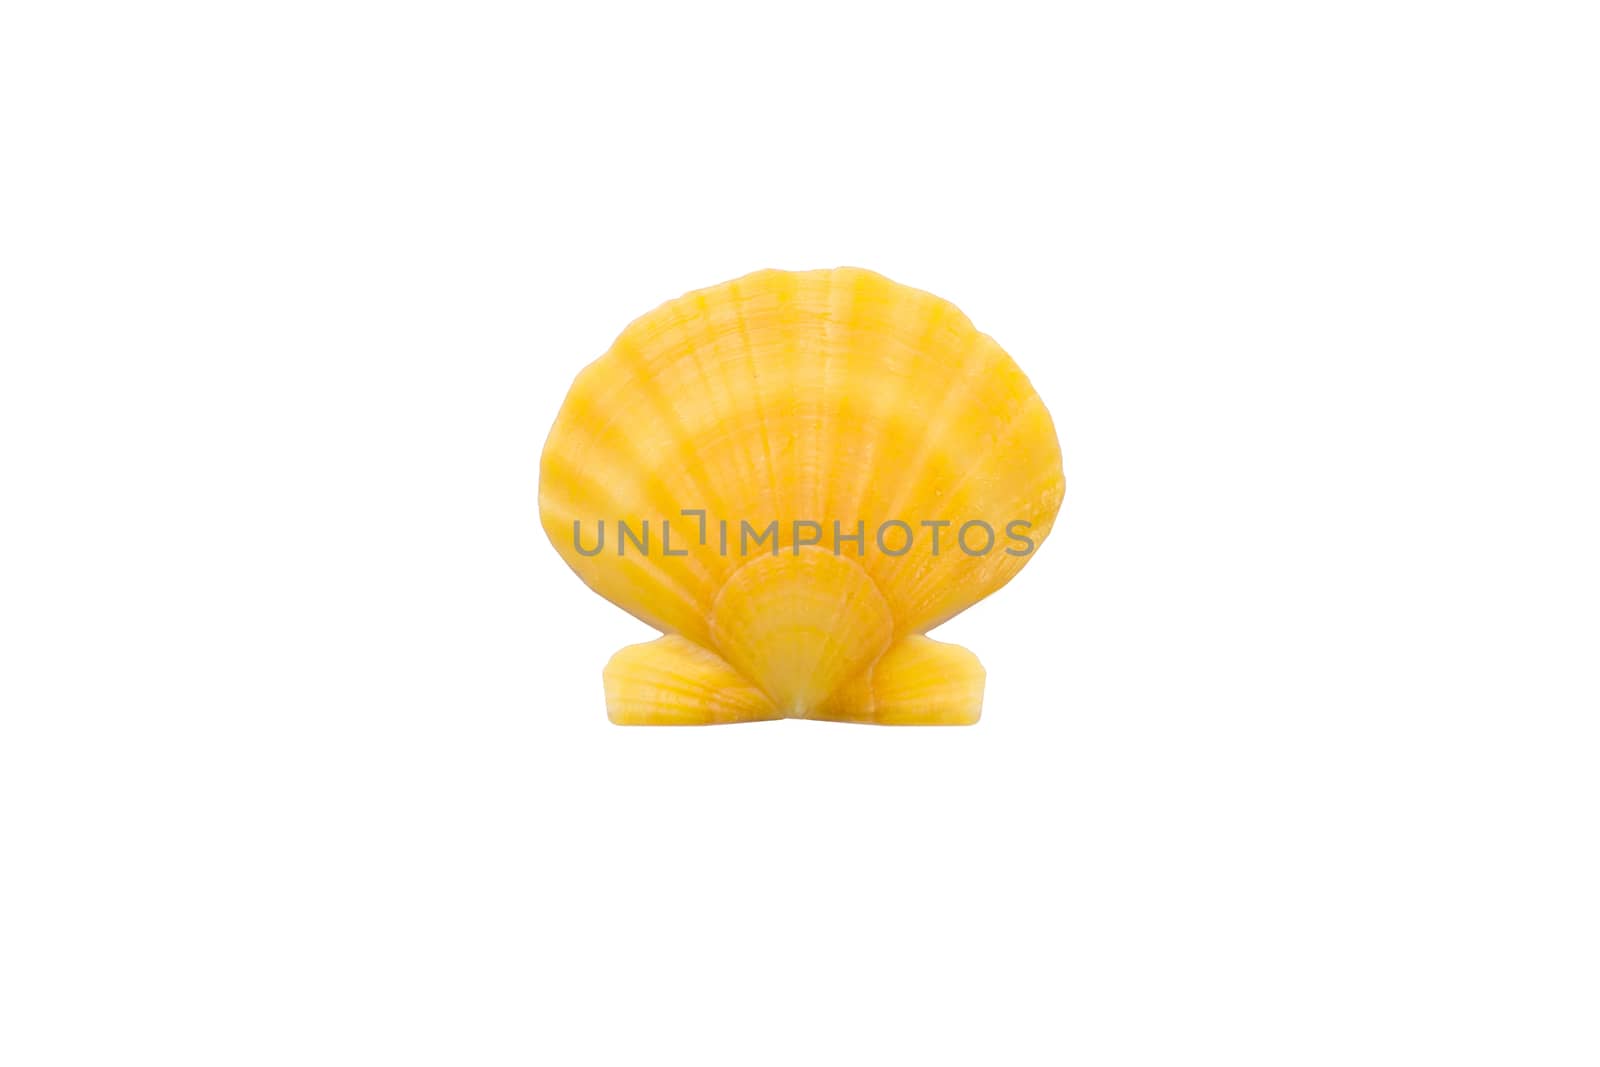 Light bright yellow orange round pearl seashell close-up on whit by VeraVerano